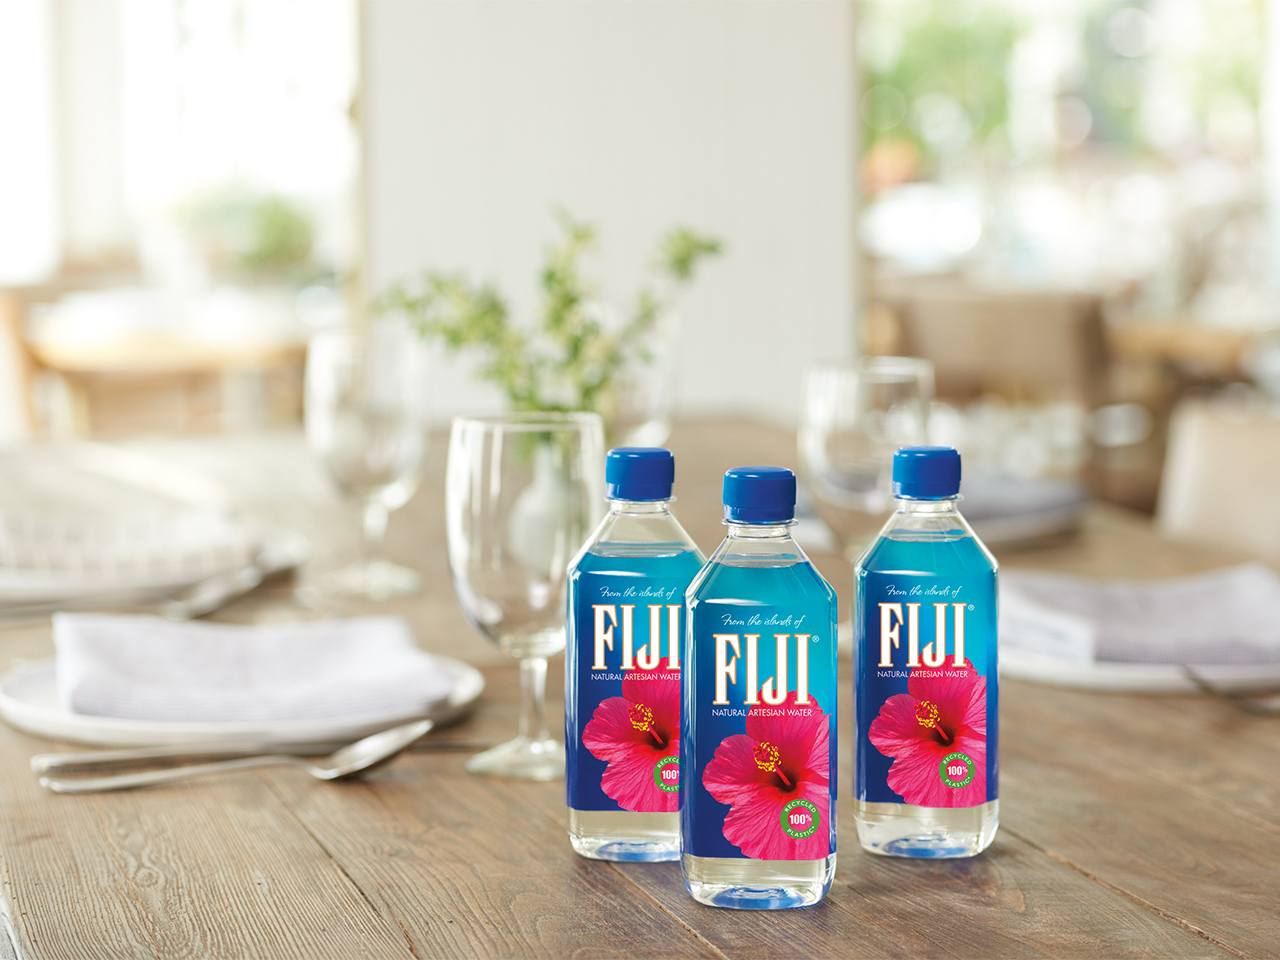 Fiji Water produces new cup holder-friendly bottle size - FoodBev Media